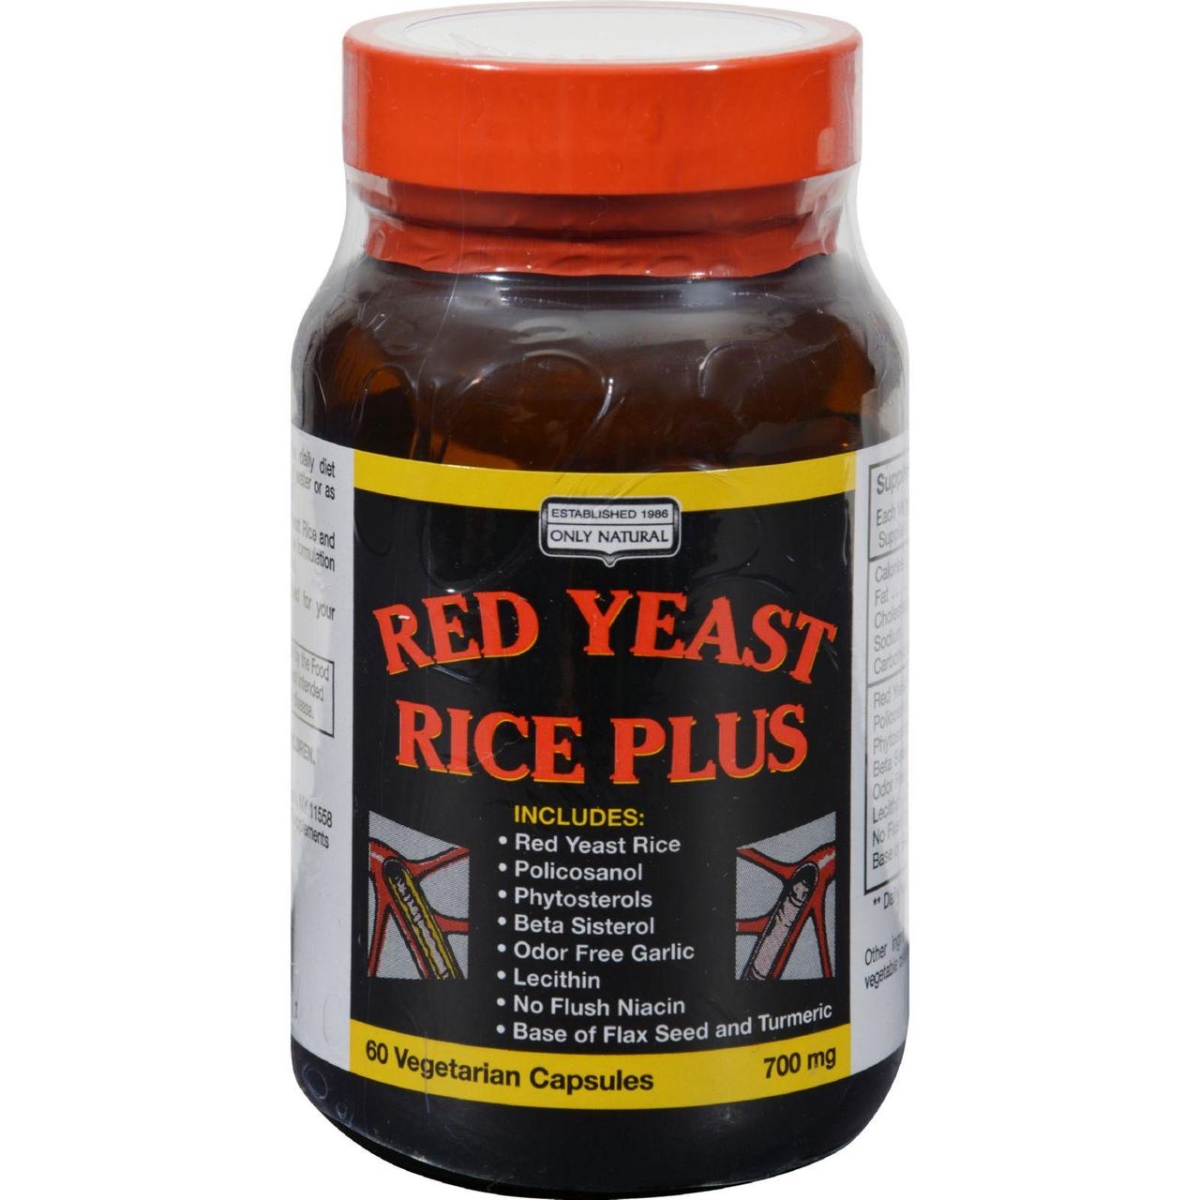 Hg0747857 Red Yeast Rice Plus - 60 Vegetable Capsules